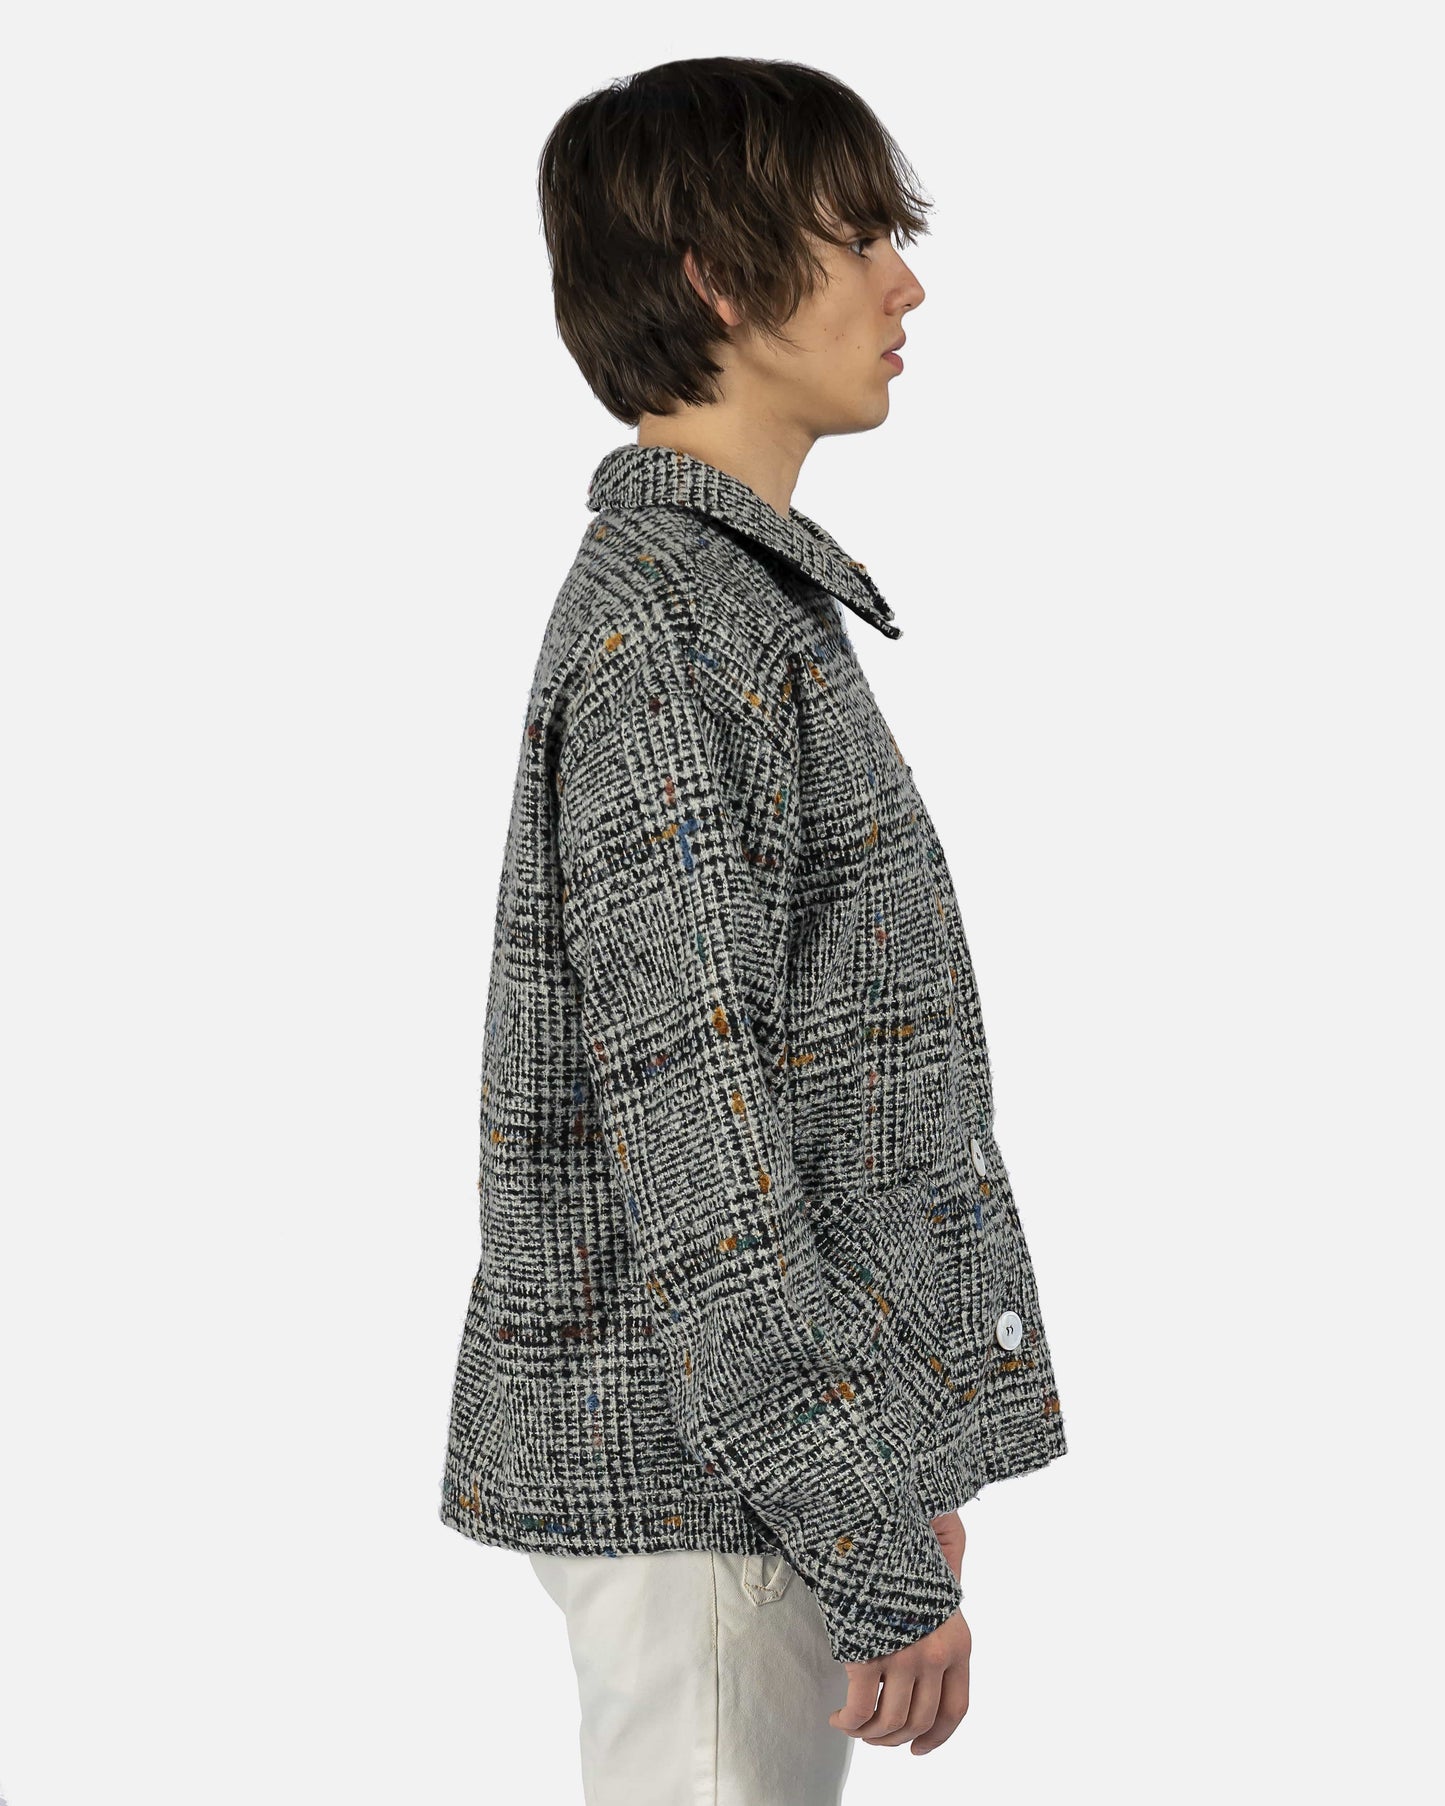 Midori Men's Jackets Wool Chore Jacket in Grey